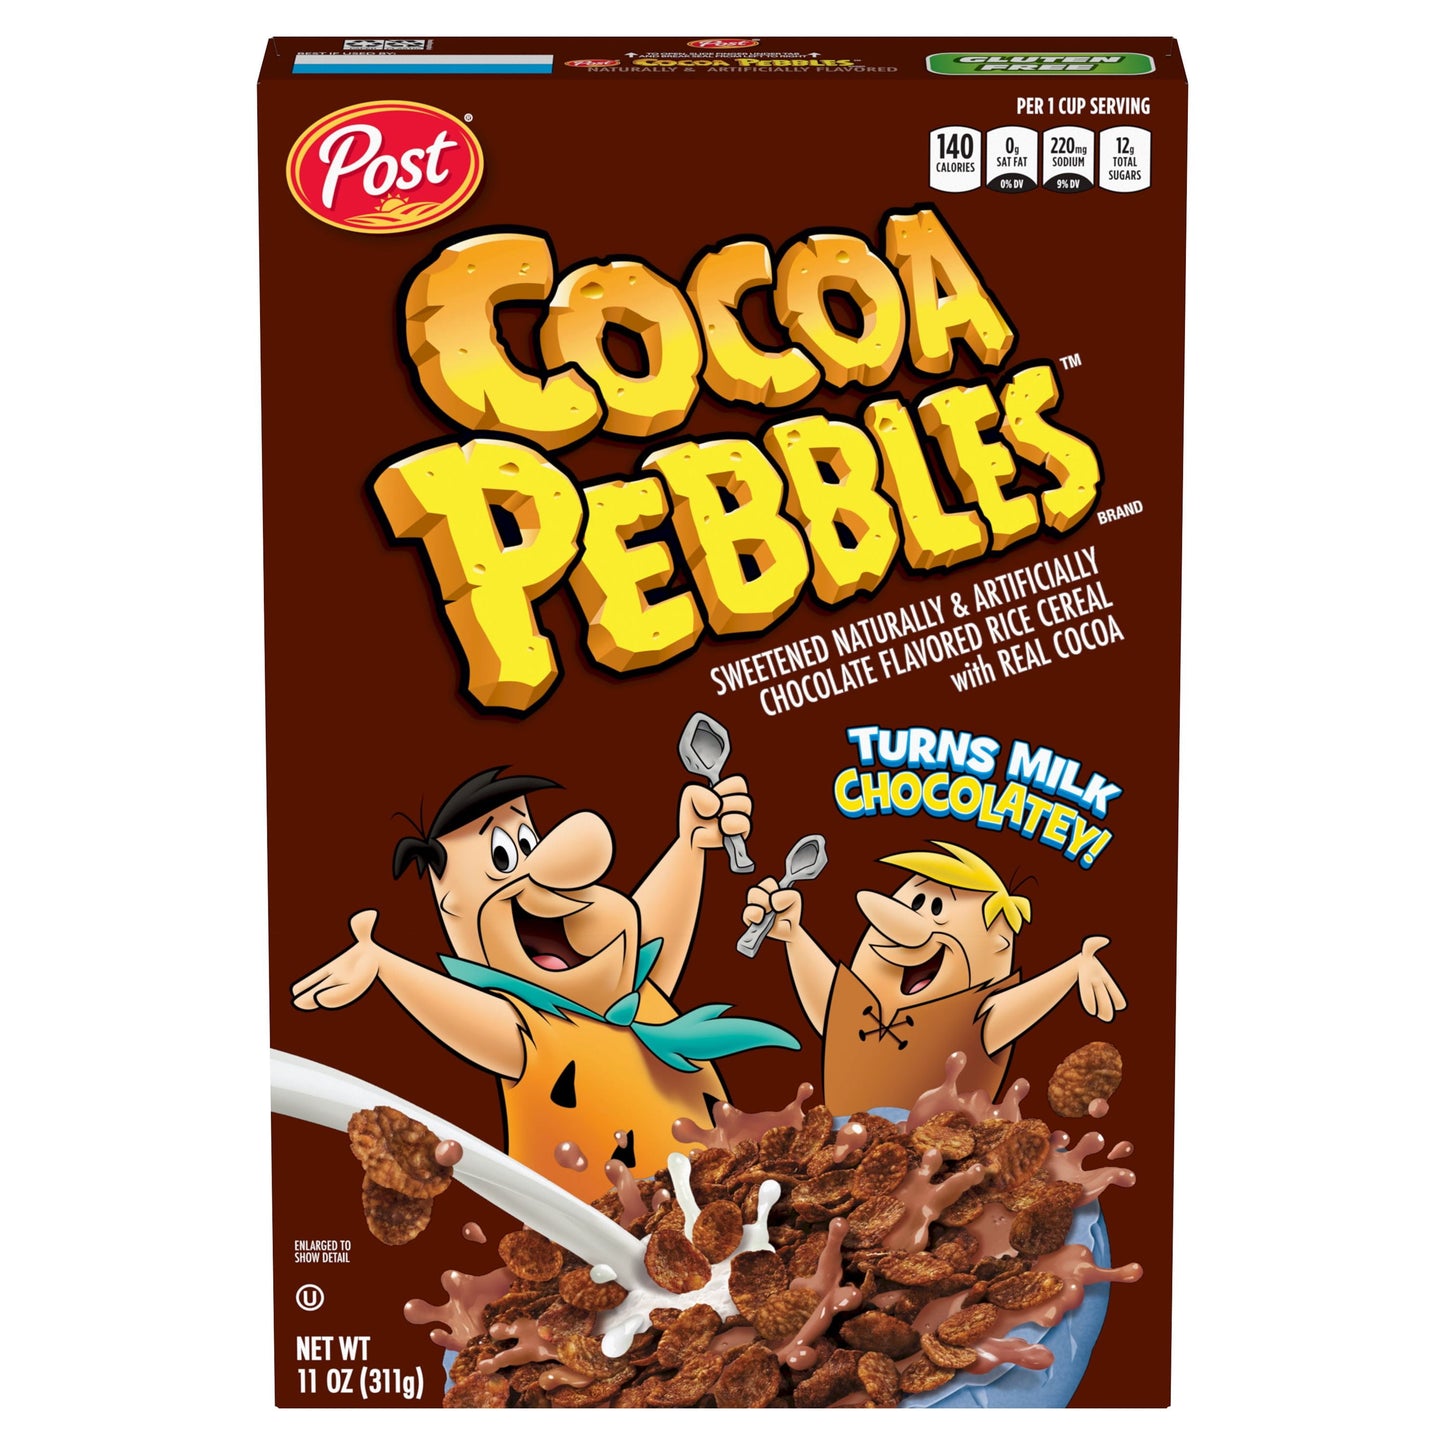 Post Cocoa Pebbles Cereal, Original, 11 Oz